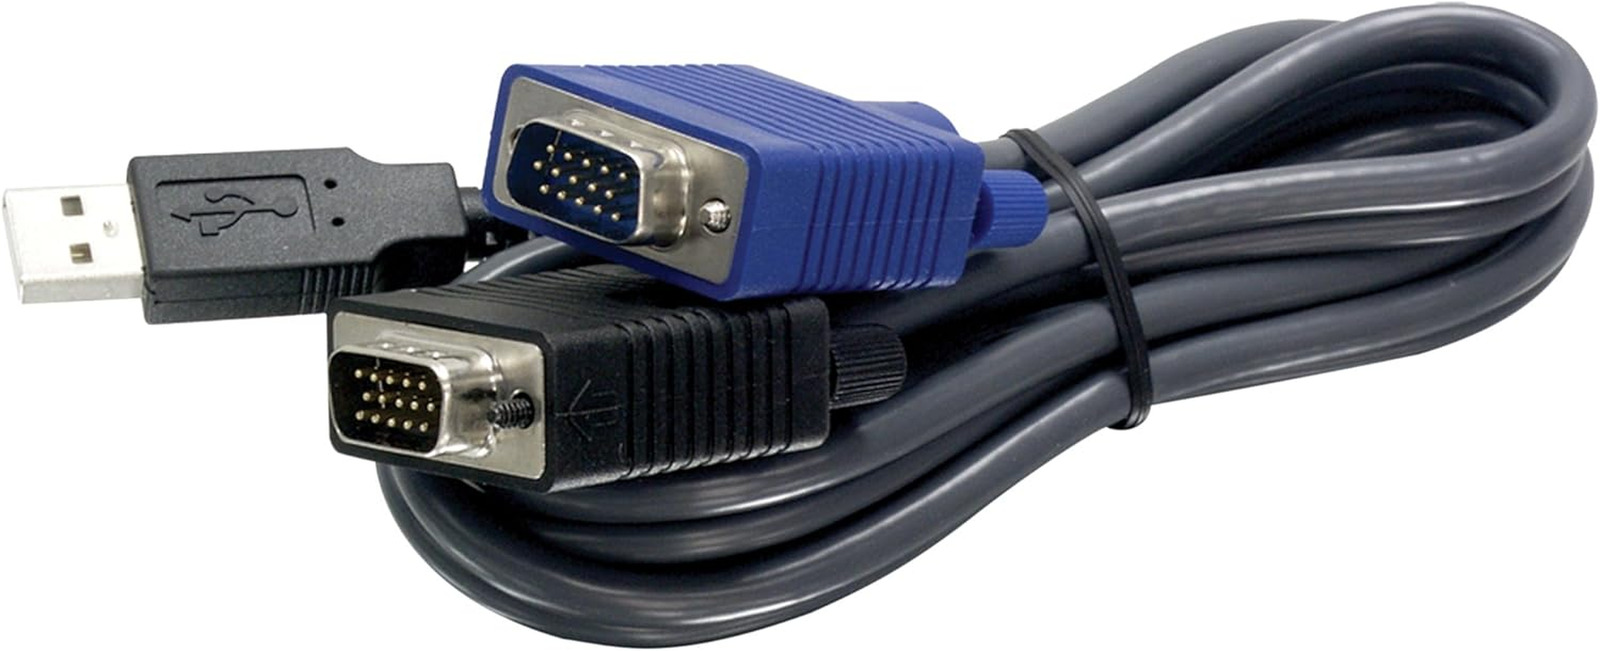 2-In-1 USB VGA KVM Cable, 1.83M (6 Feet), VGA-SVGA HDB 15-Pin Male to M